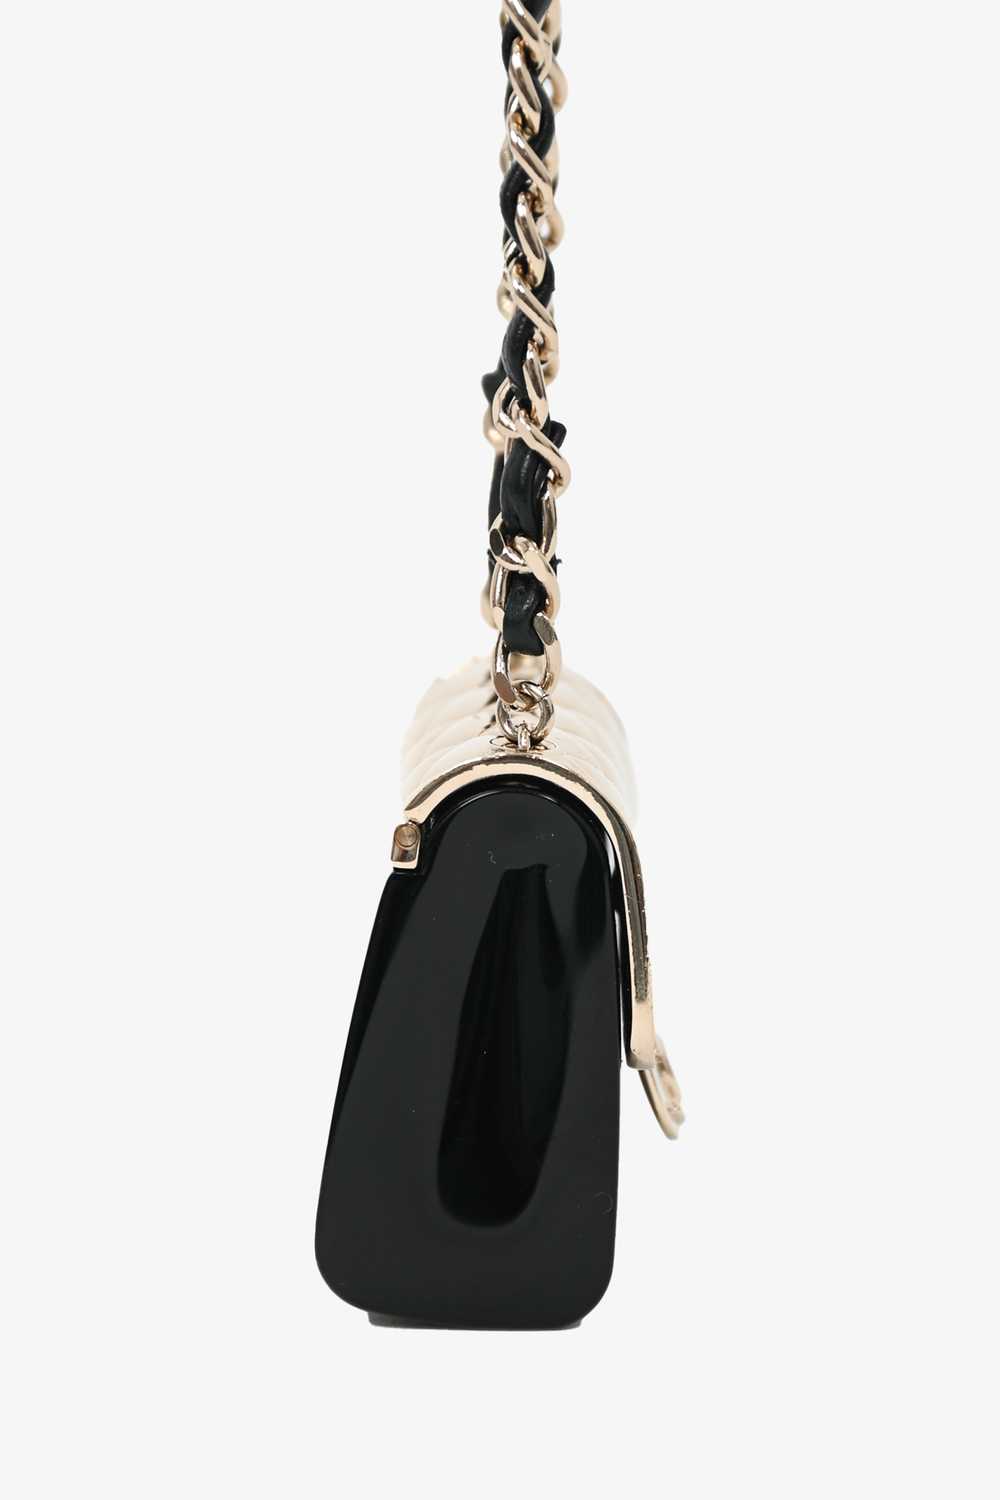 Pre-loved Chanel™ Black/Gold Mini Purse Necklace - image 4